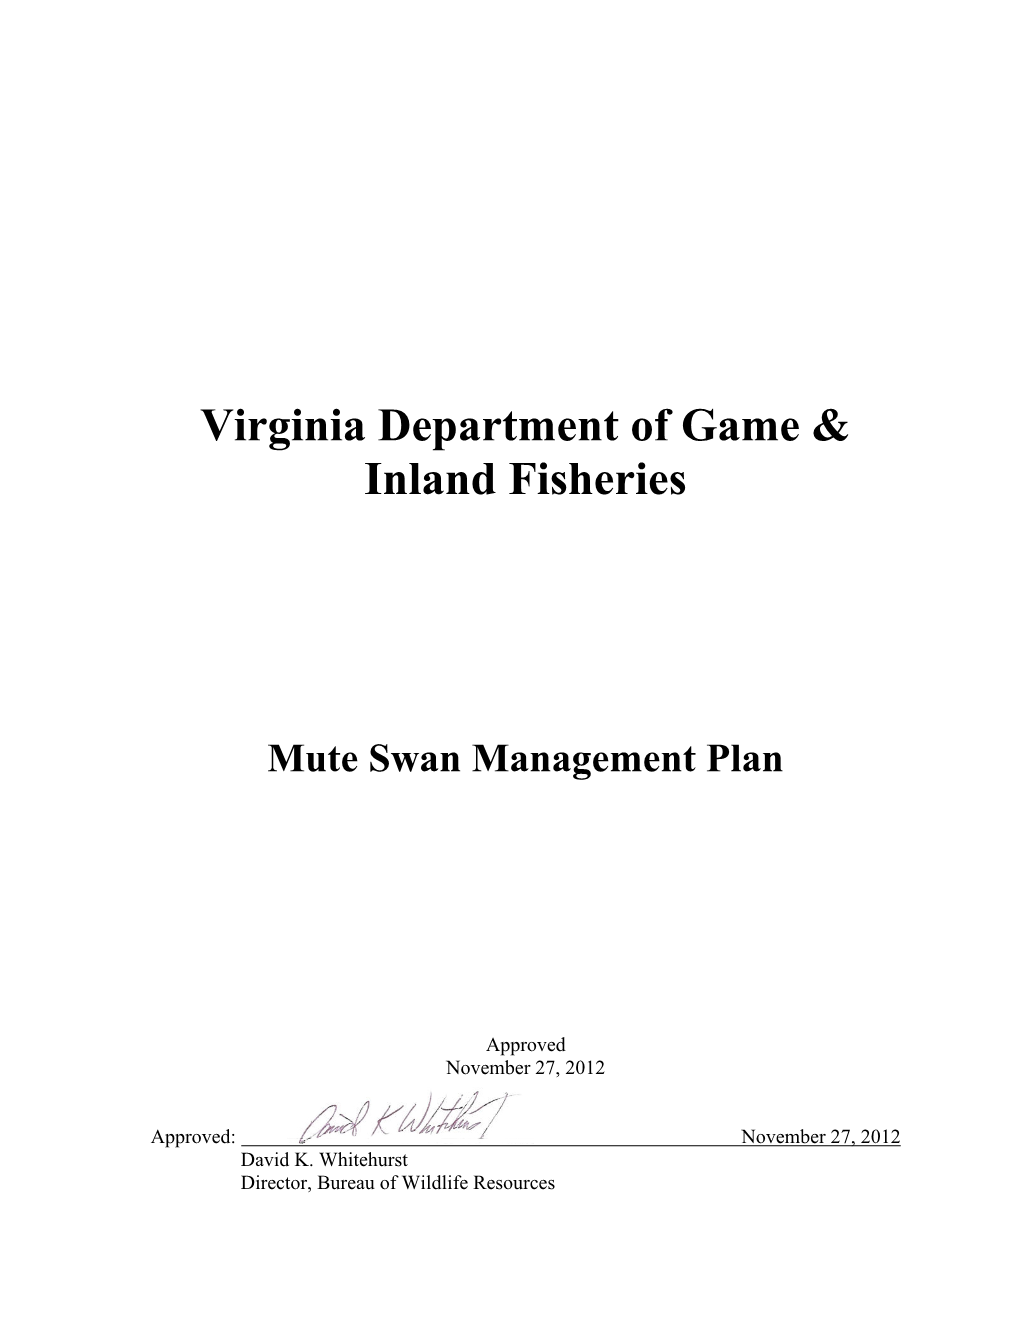 Virginia Mute Swan Management Plan